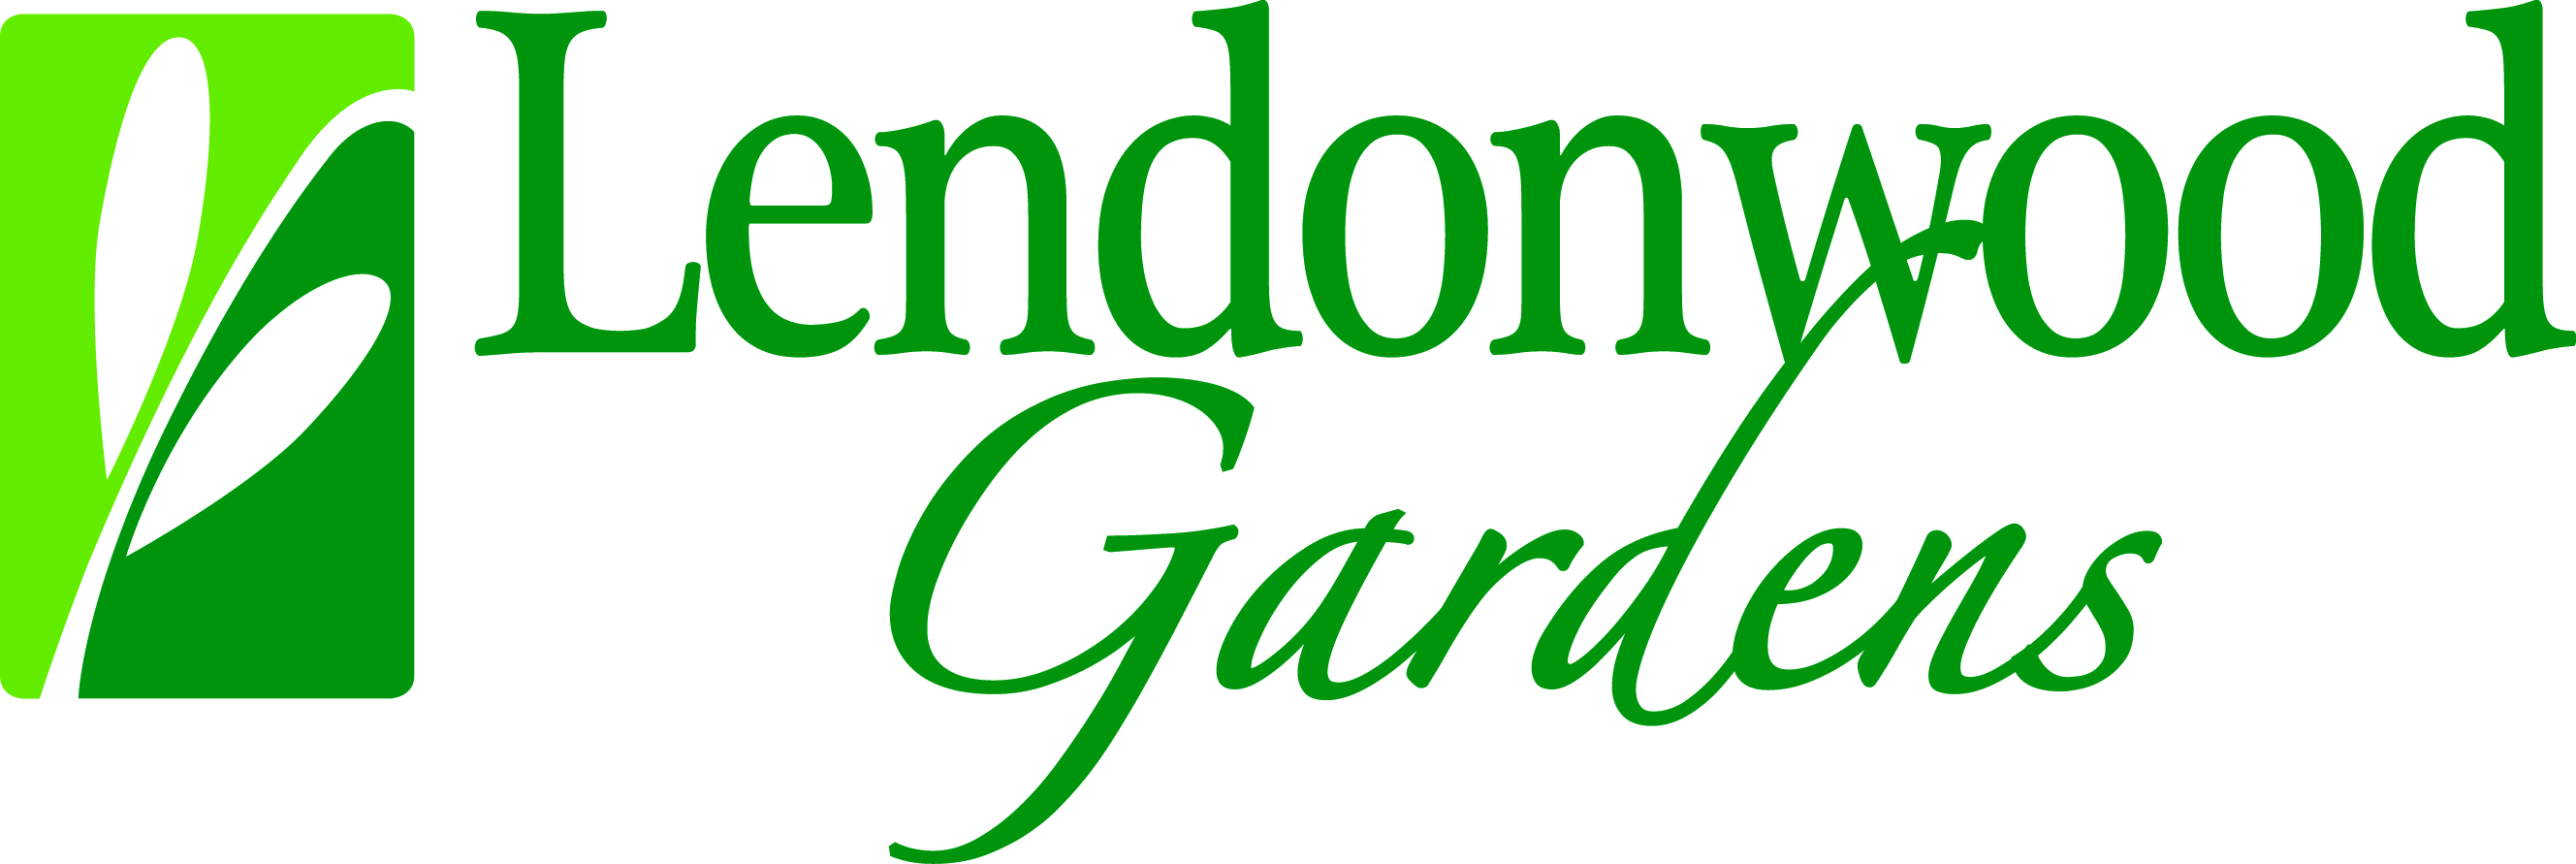 Lendonwood Gardens